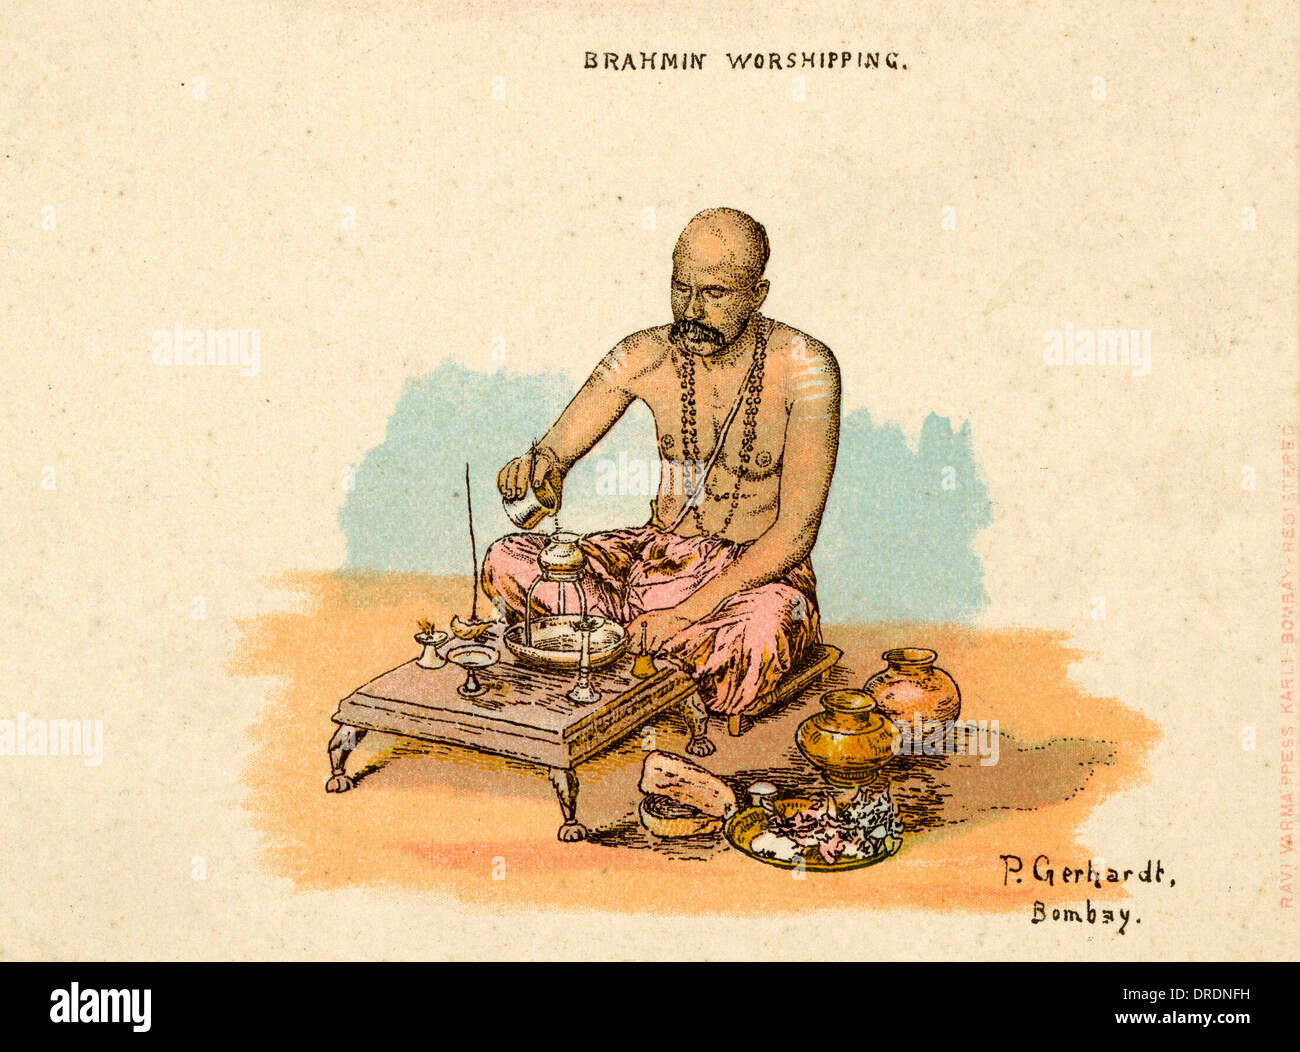 India - A Brahmin worshipping Stock Photo